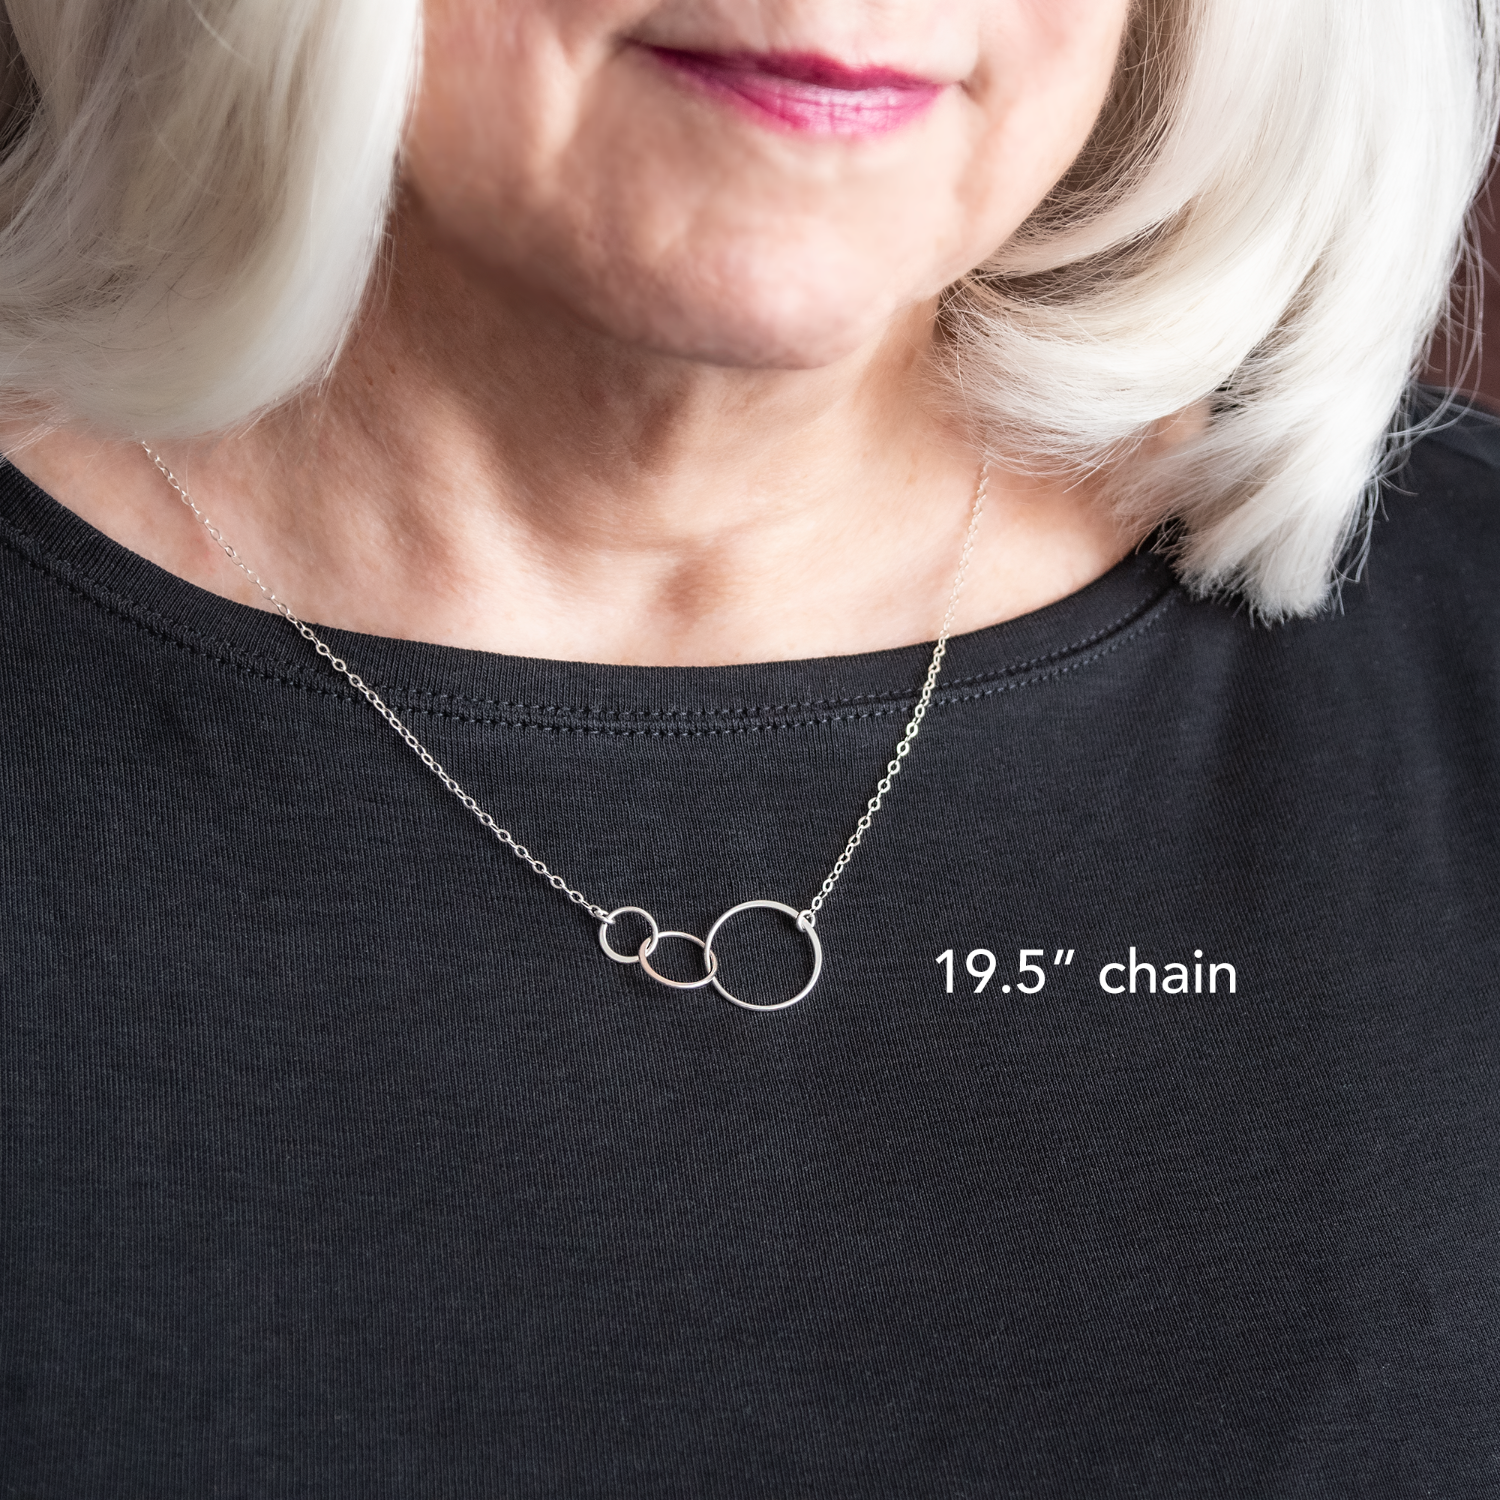 Charm Bracelet or Charm Necklace? #LoveGold - Gem Gossip - Jewelry Blog